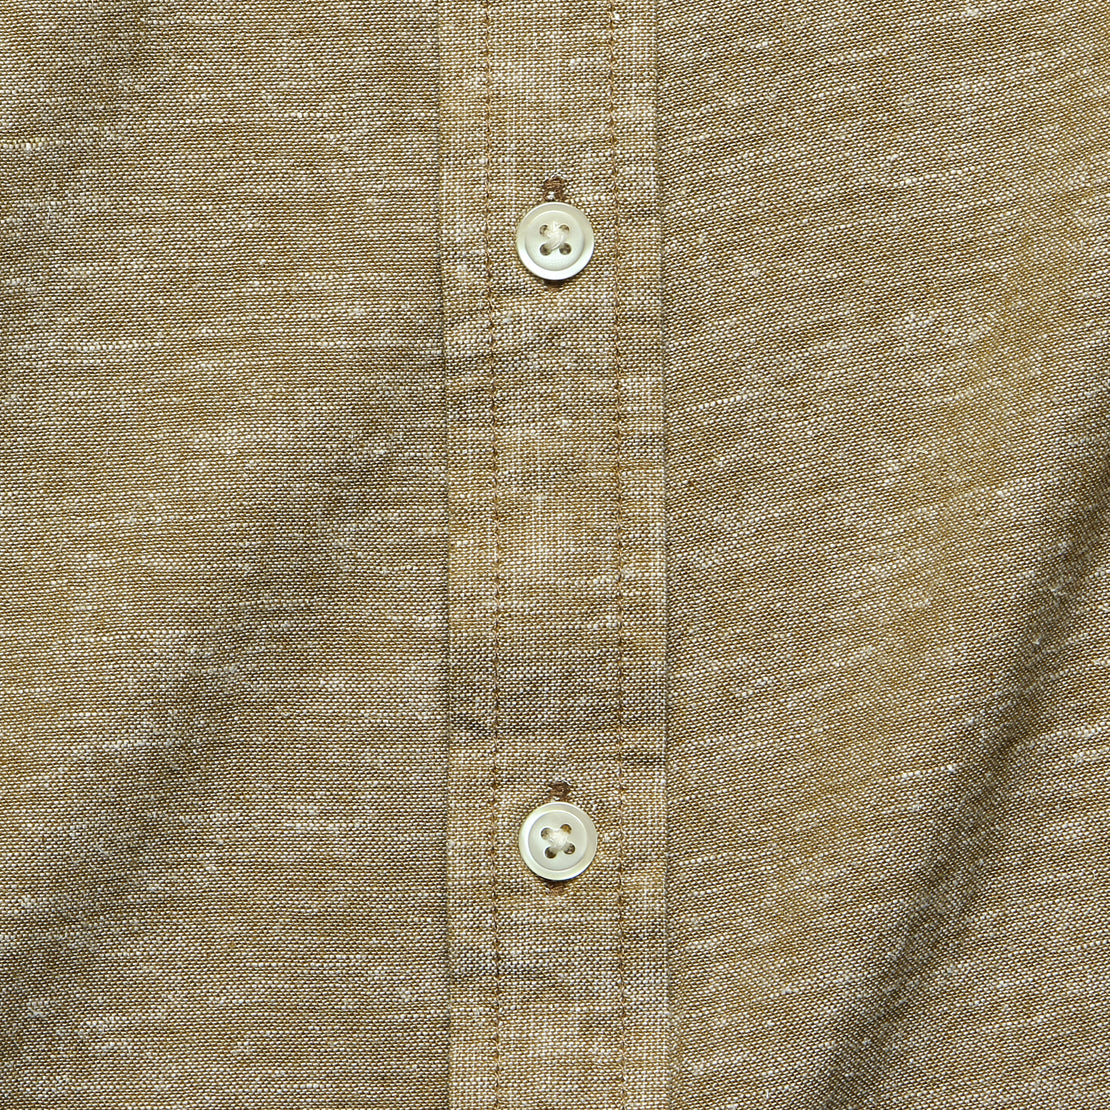 Jordan Shirt - Bronze Chambray - Bridge & Burn - STAG Provisions - Tops - S/S Woven - Solid